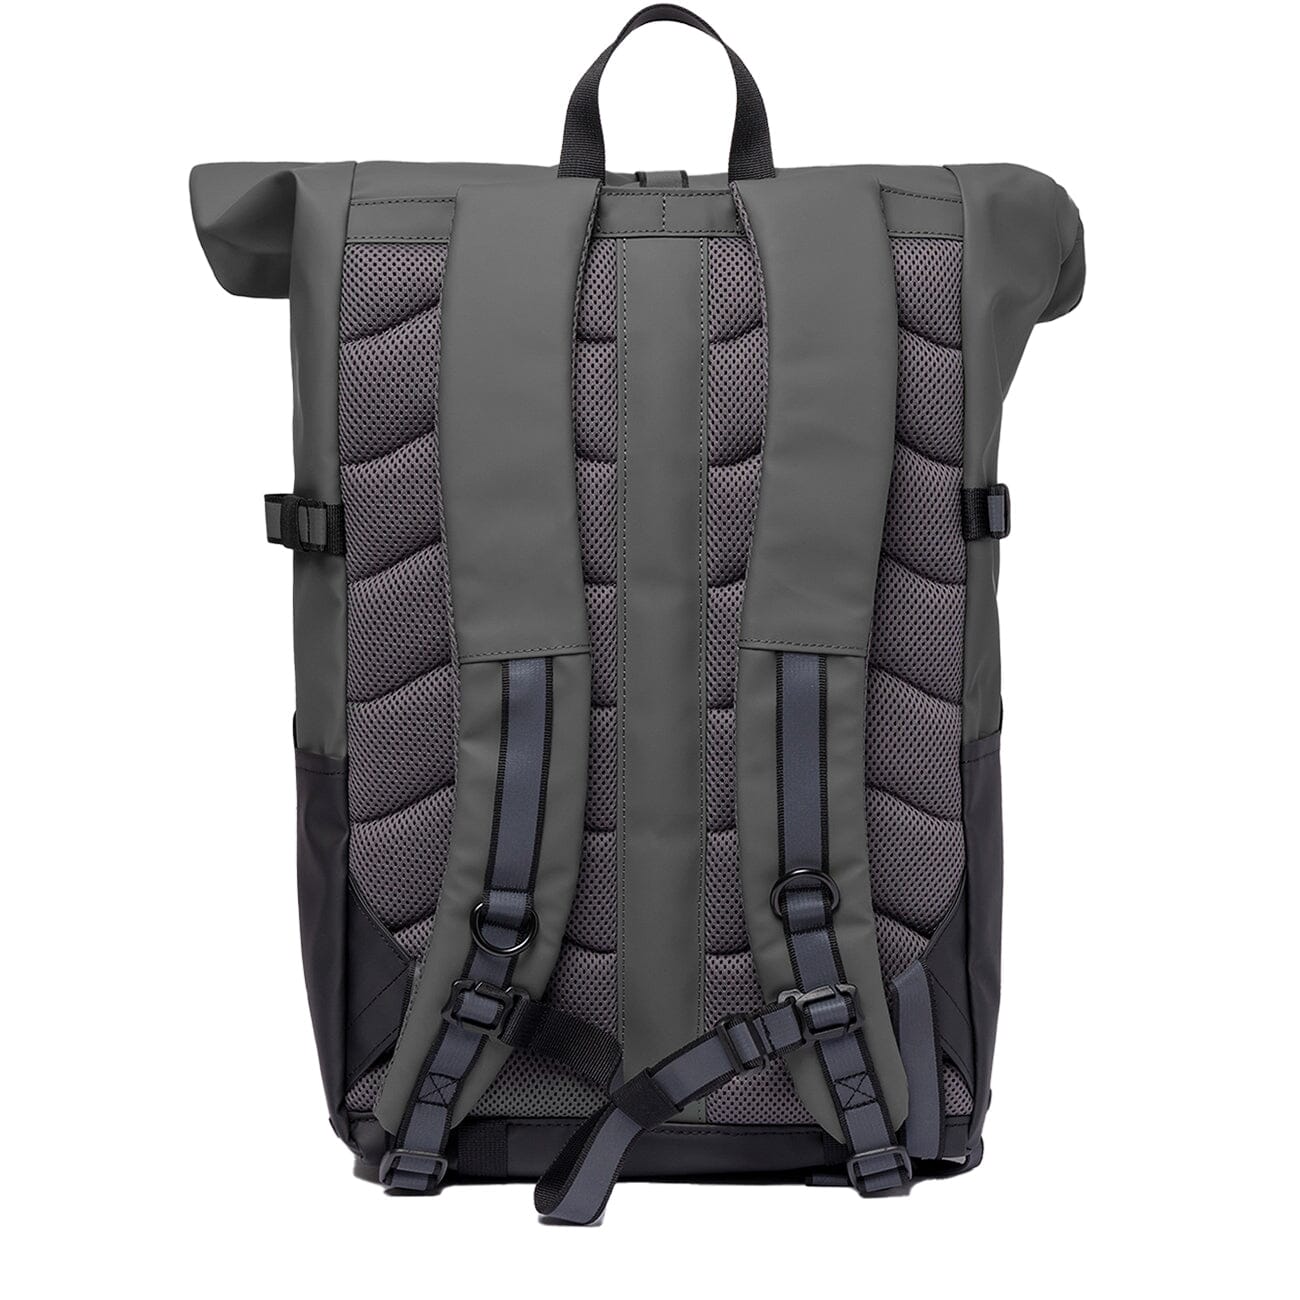 waterproof commuter backpack ruben 2 sandqvist multi dark color back view